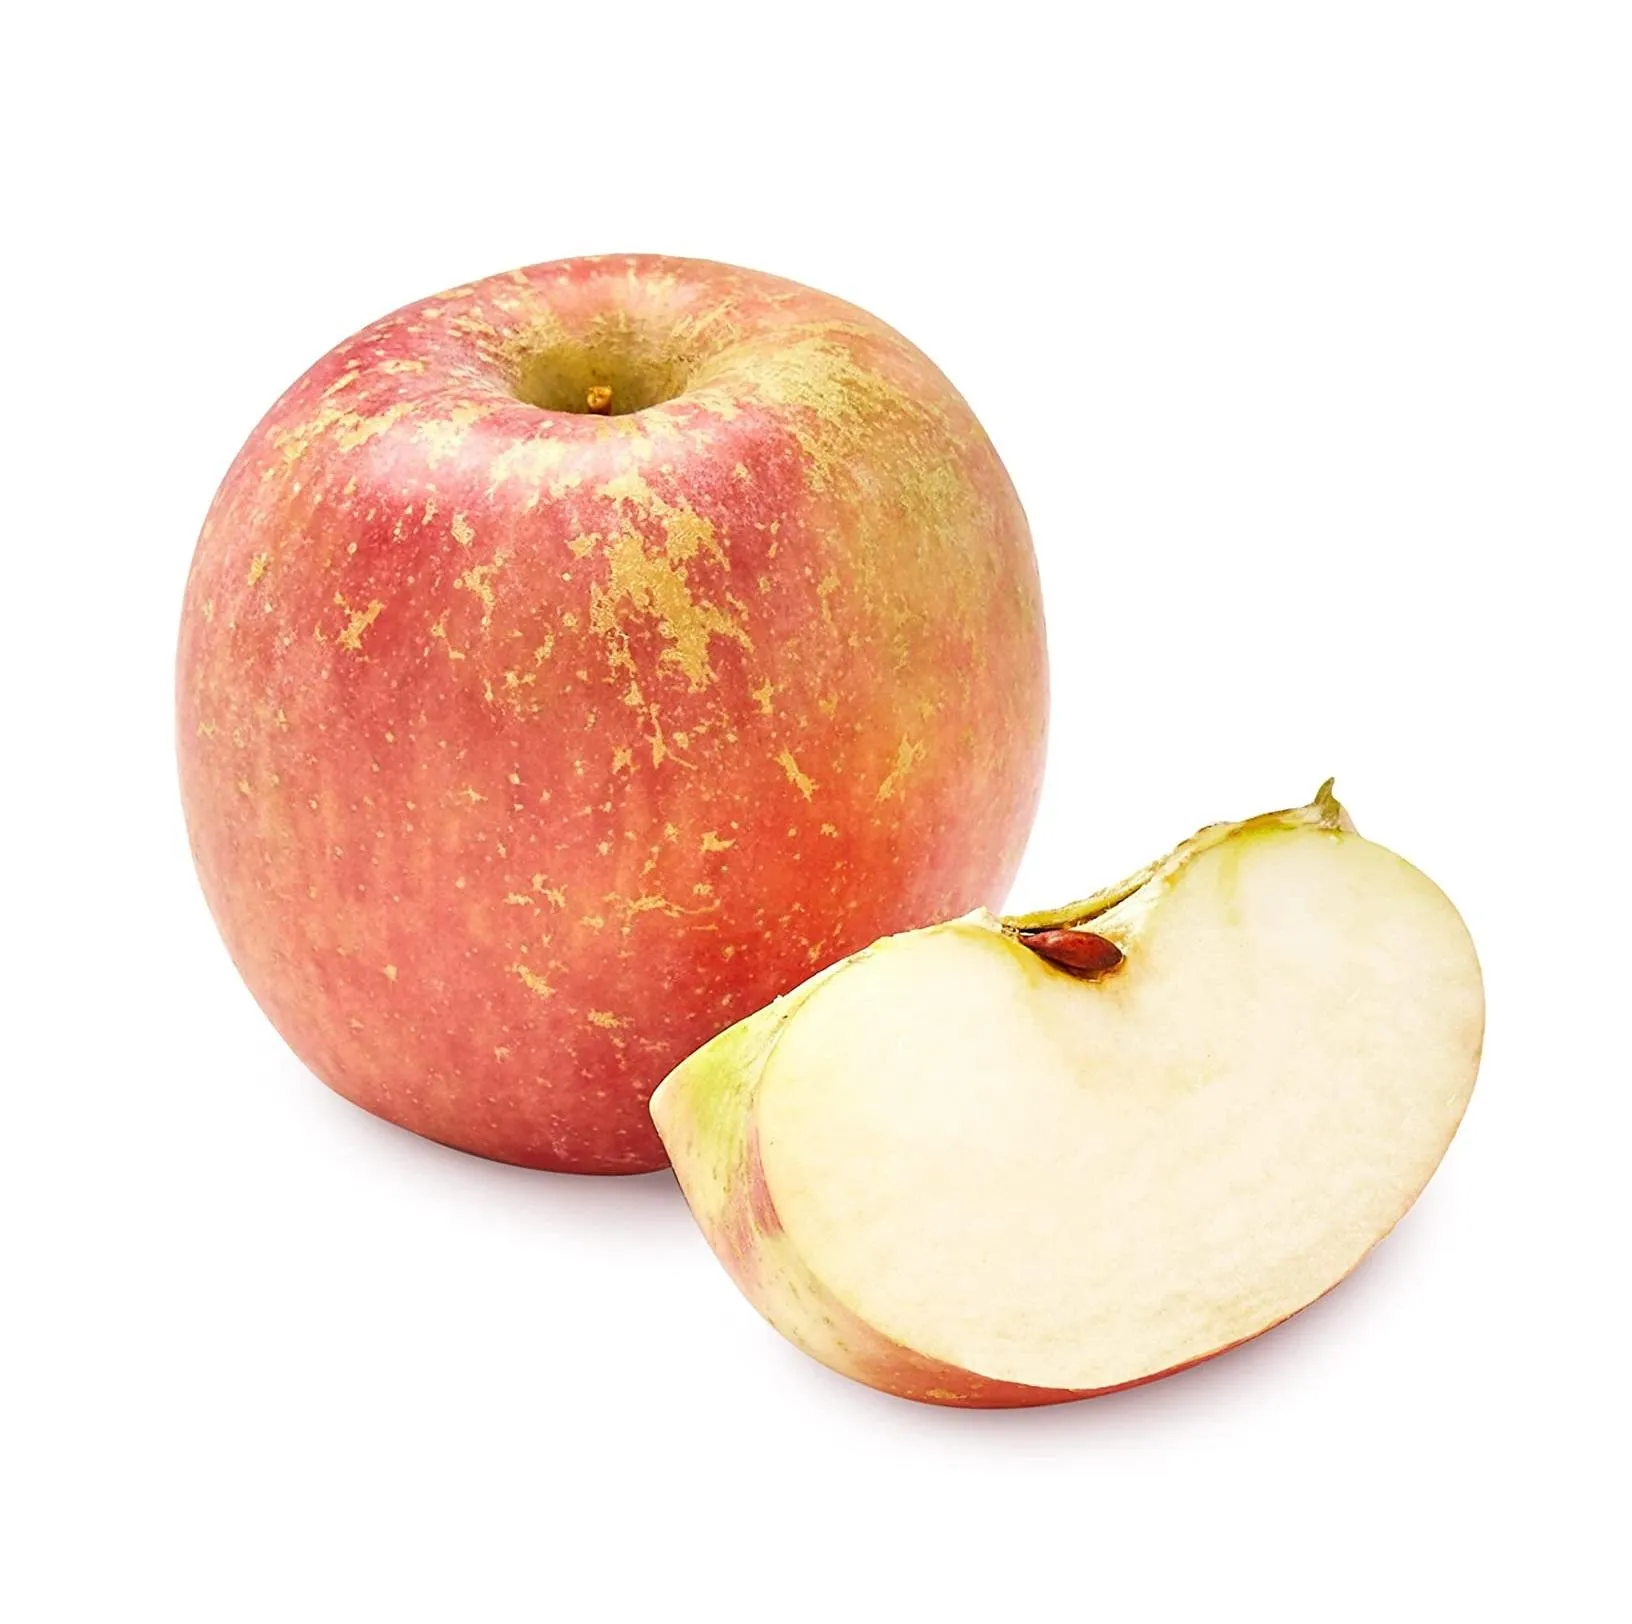 Buy and wholesale price of redlum gala apple